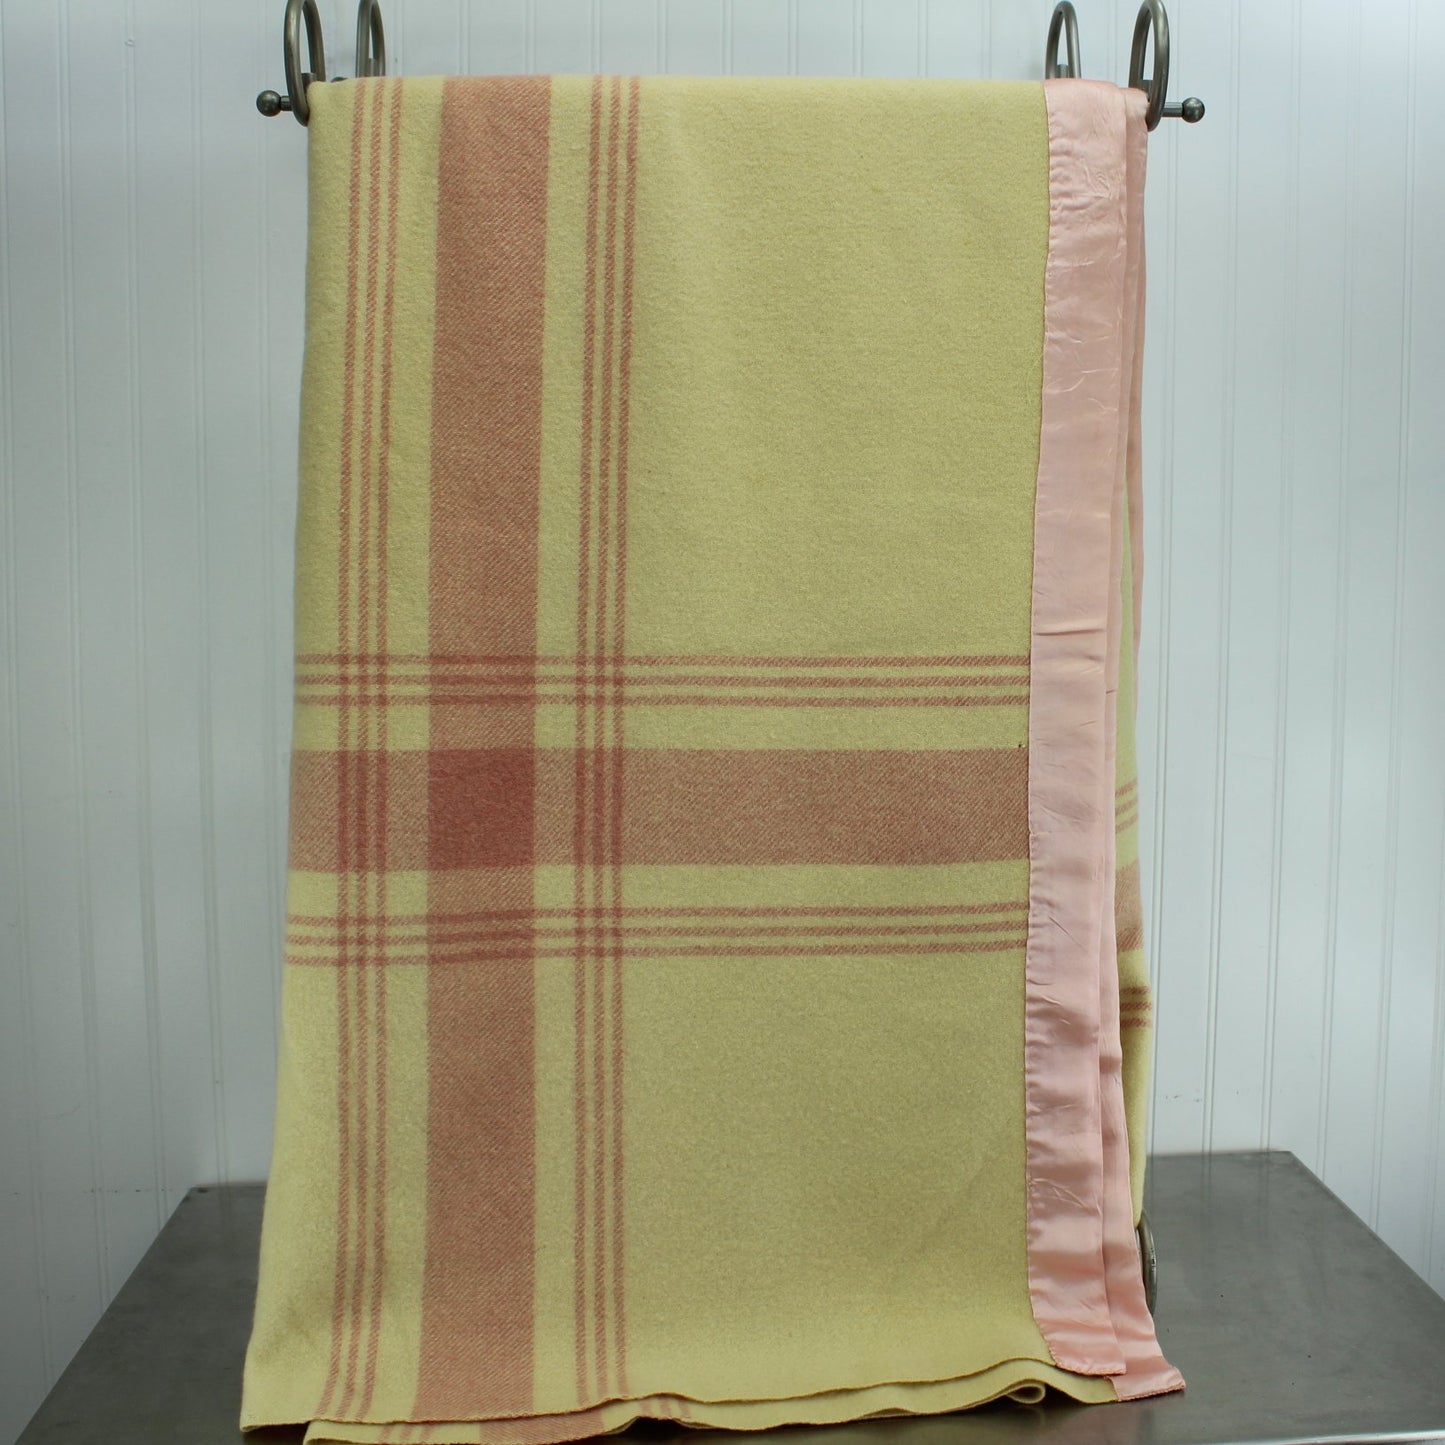 All Seasons Light Medium Cabin Style Wool Blanket Cream Pink Stripes Late 1940s vertical view